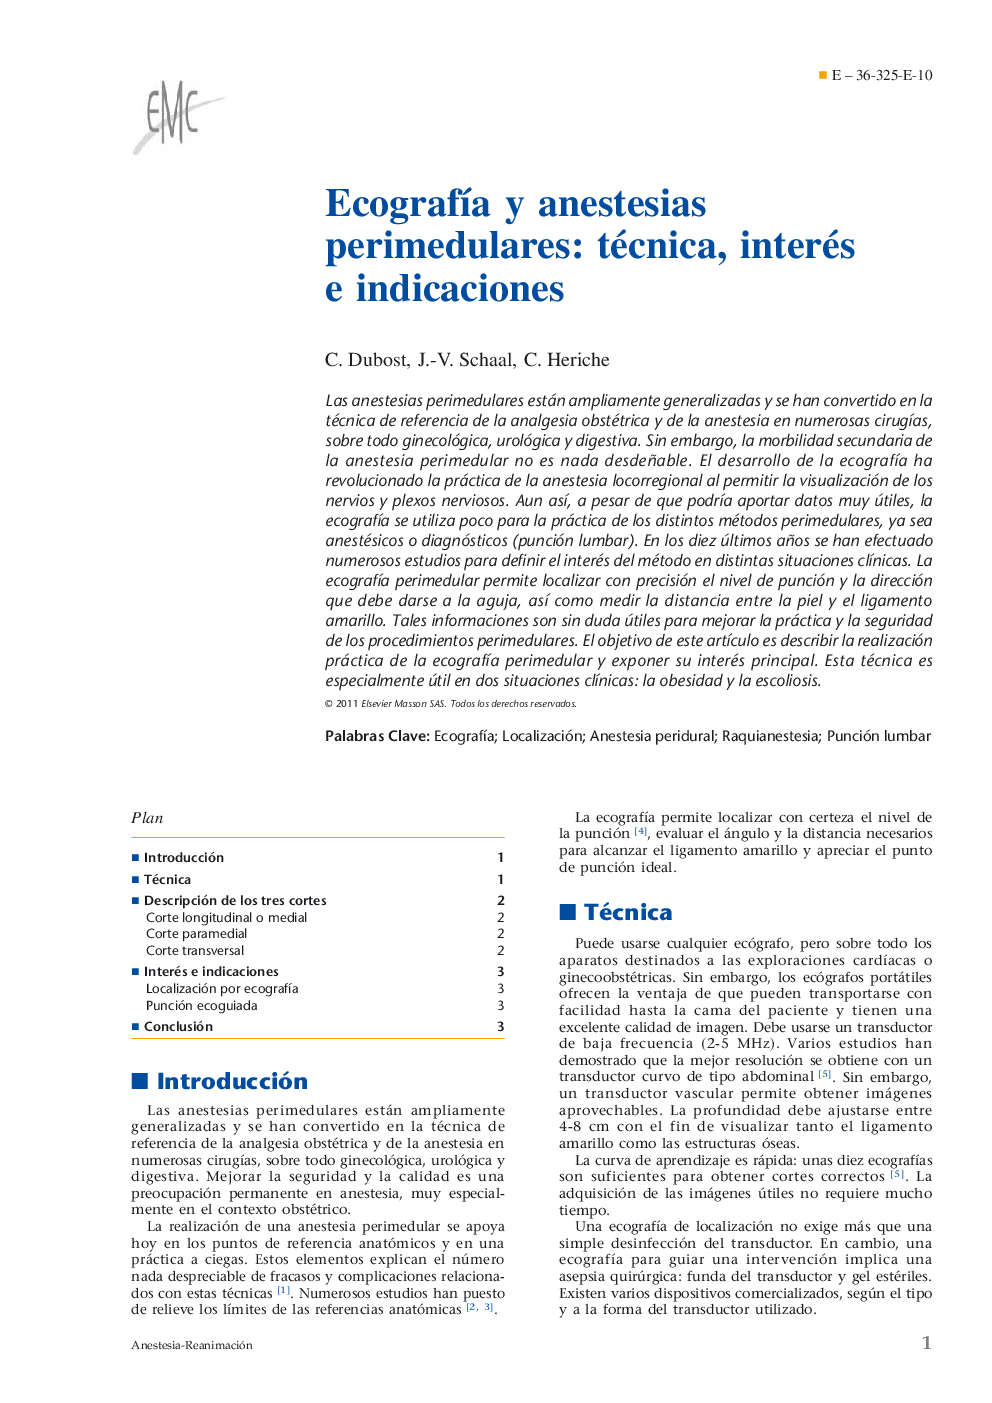 Ecografía y anestesias perimedulares: técnica, interés e indicaciones